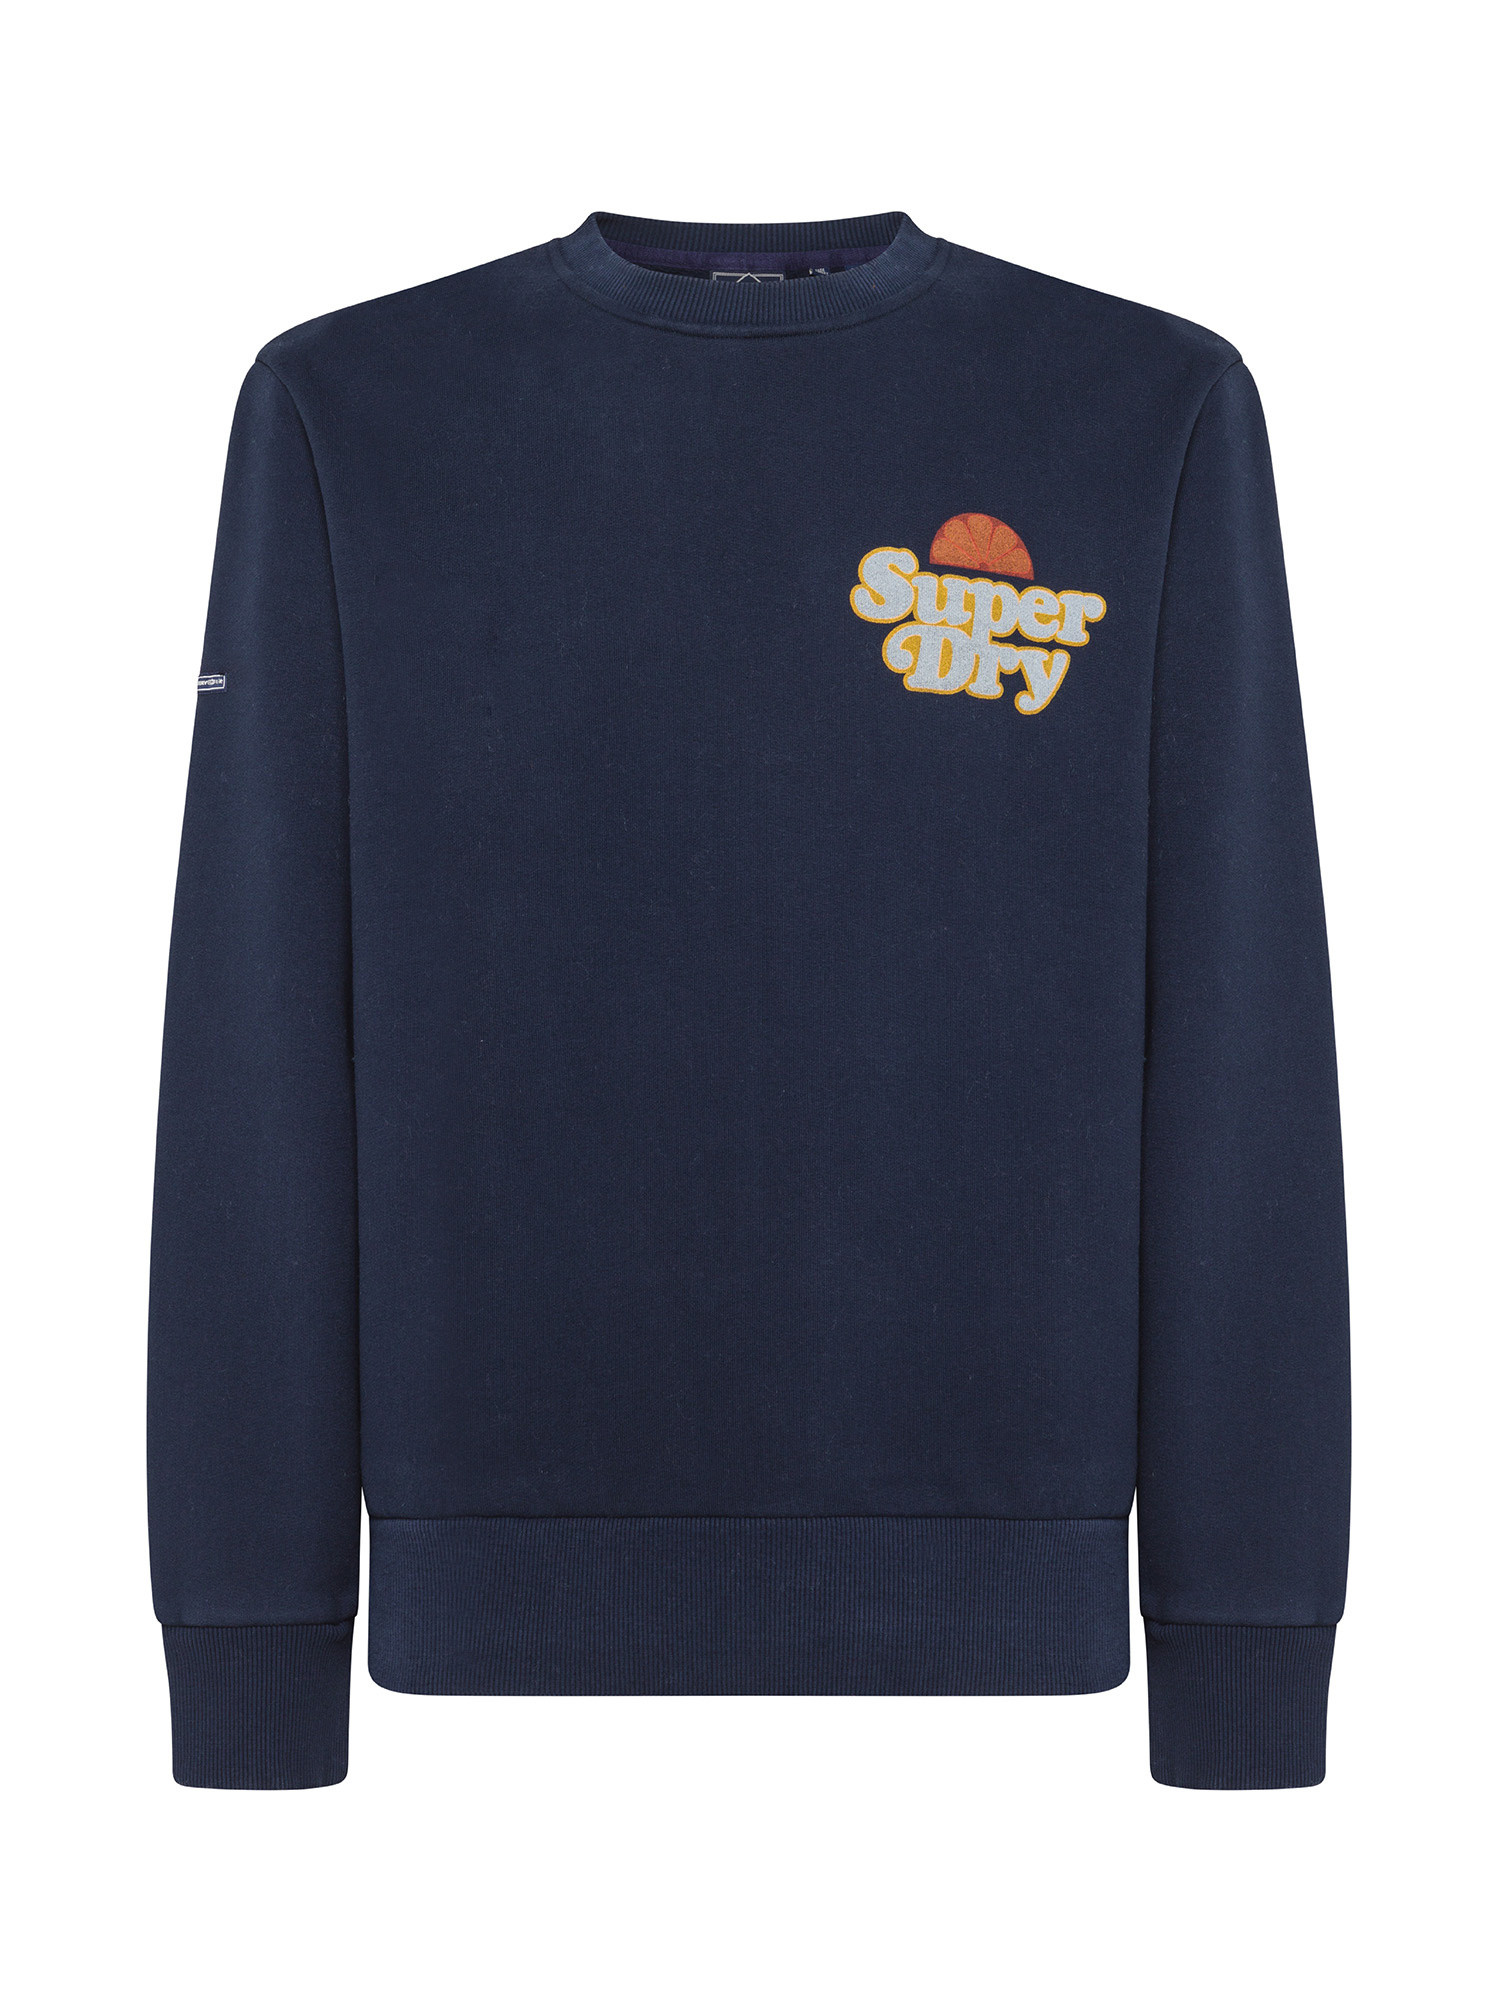 Superdry - Crewneck sweatshirt with print, Dark Blue, large image number 0